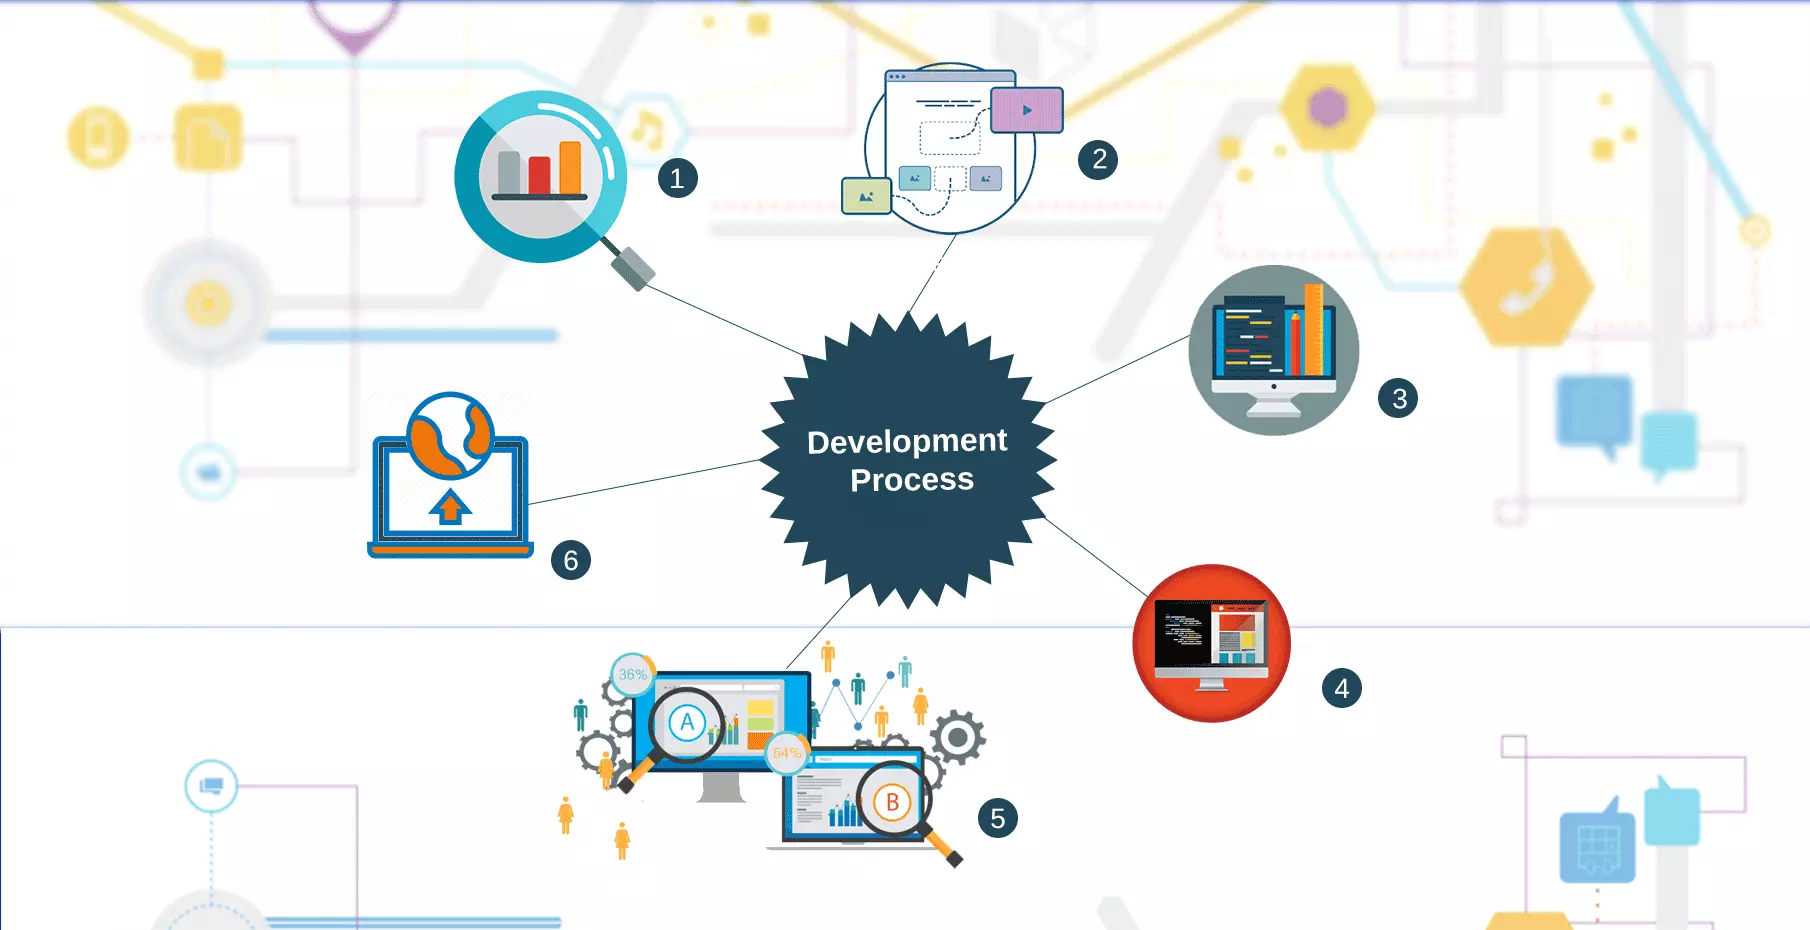 The process of web application development